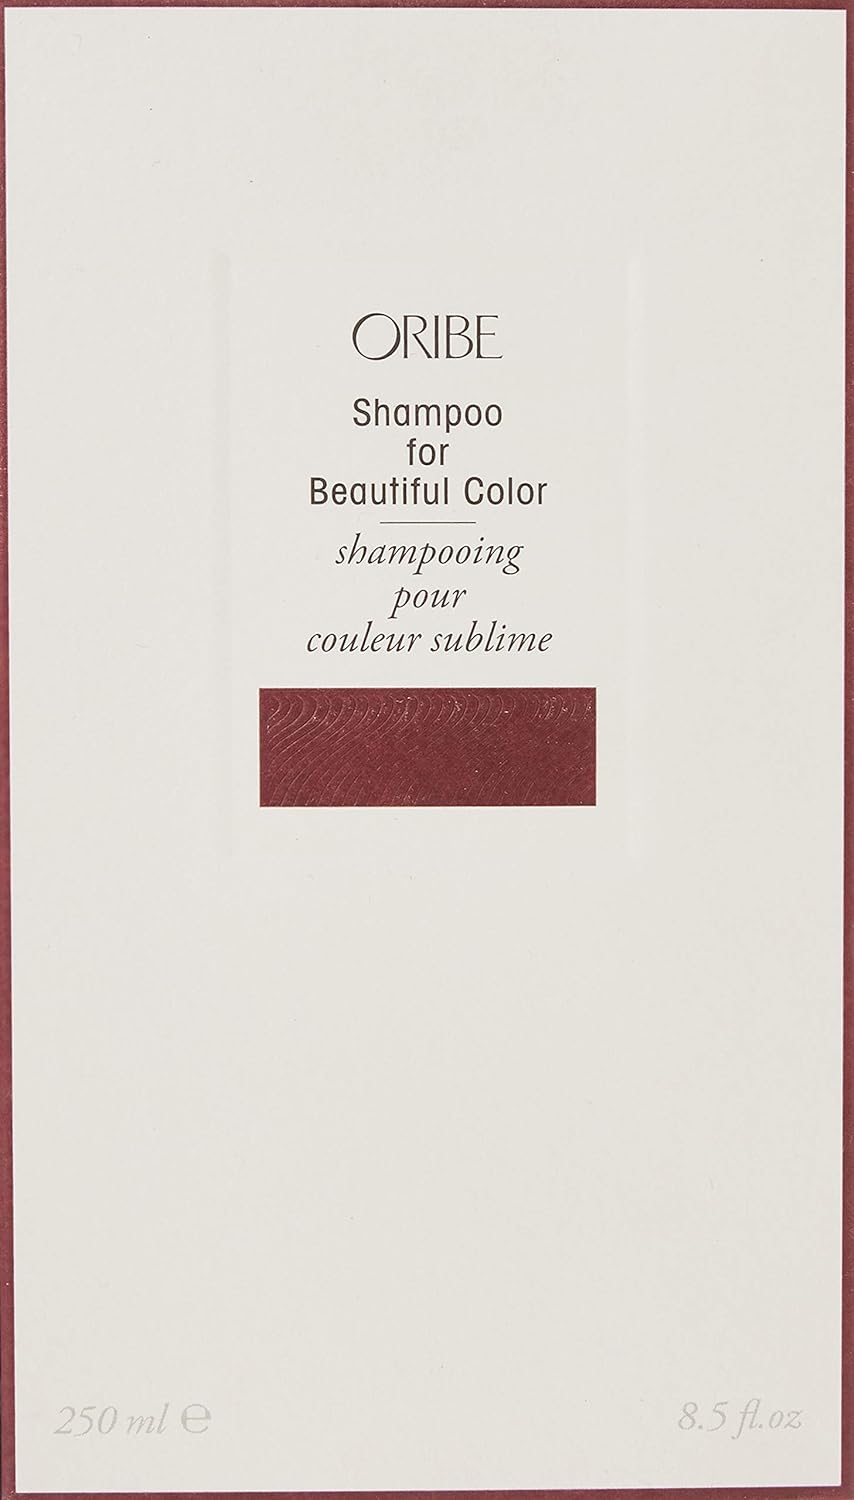  ORIBE Shampoo for Beautiful Color